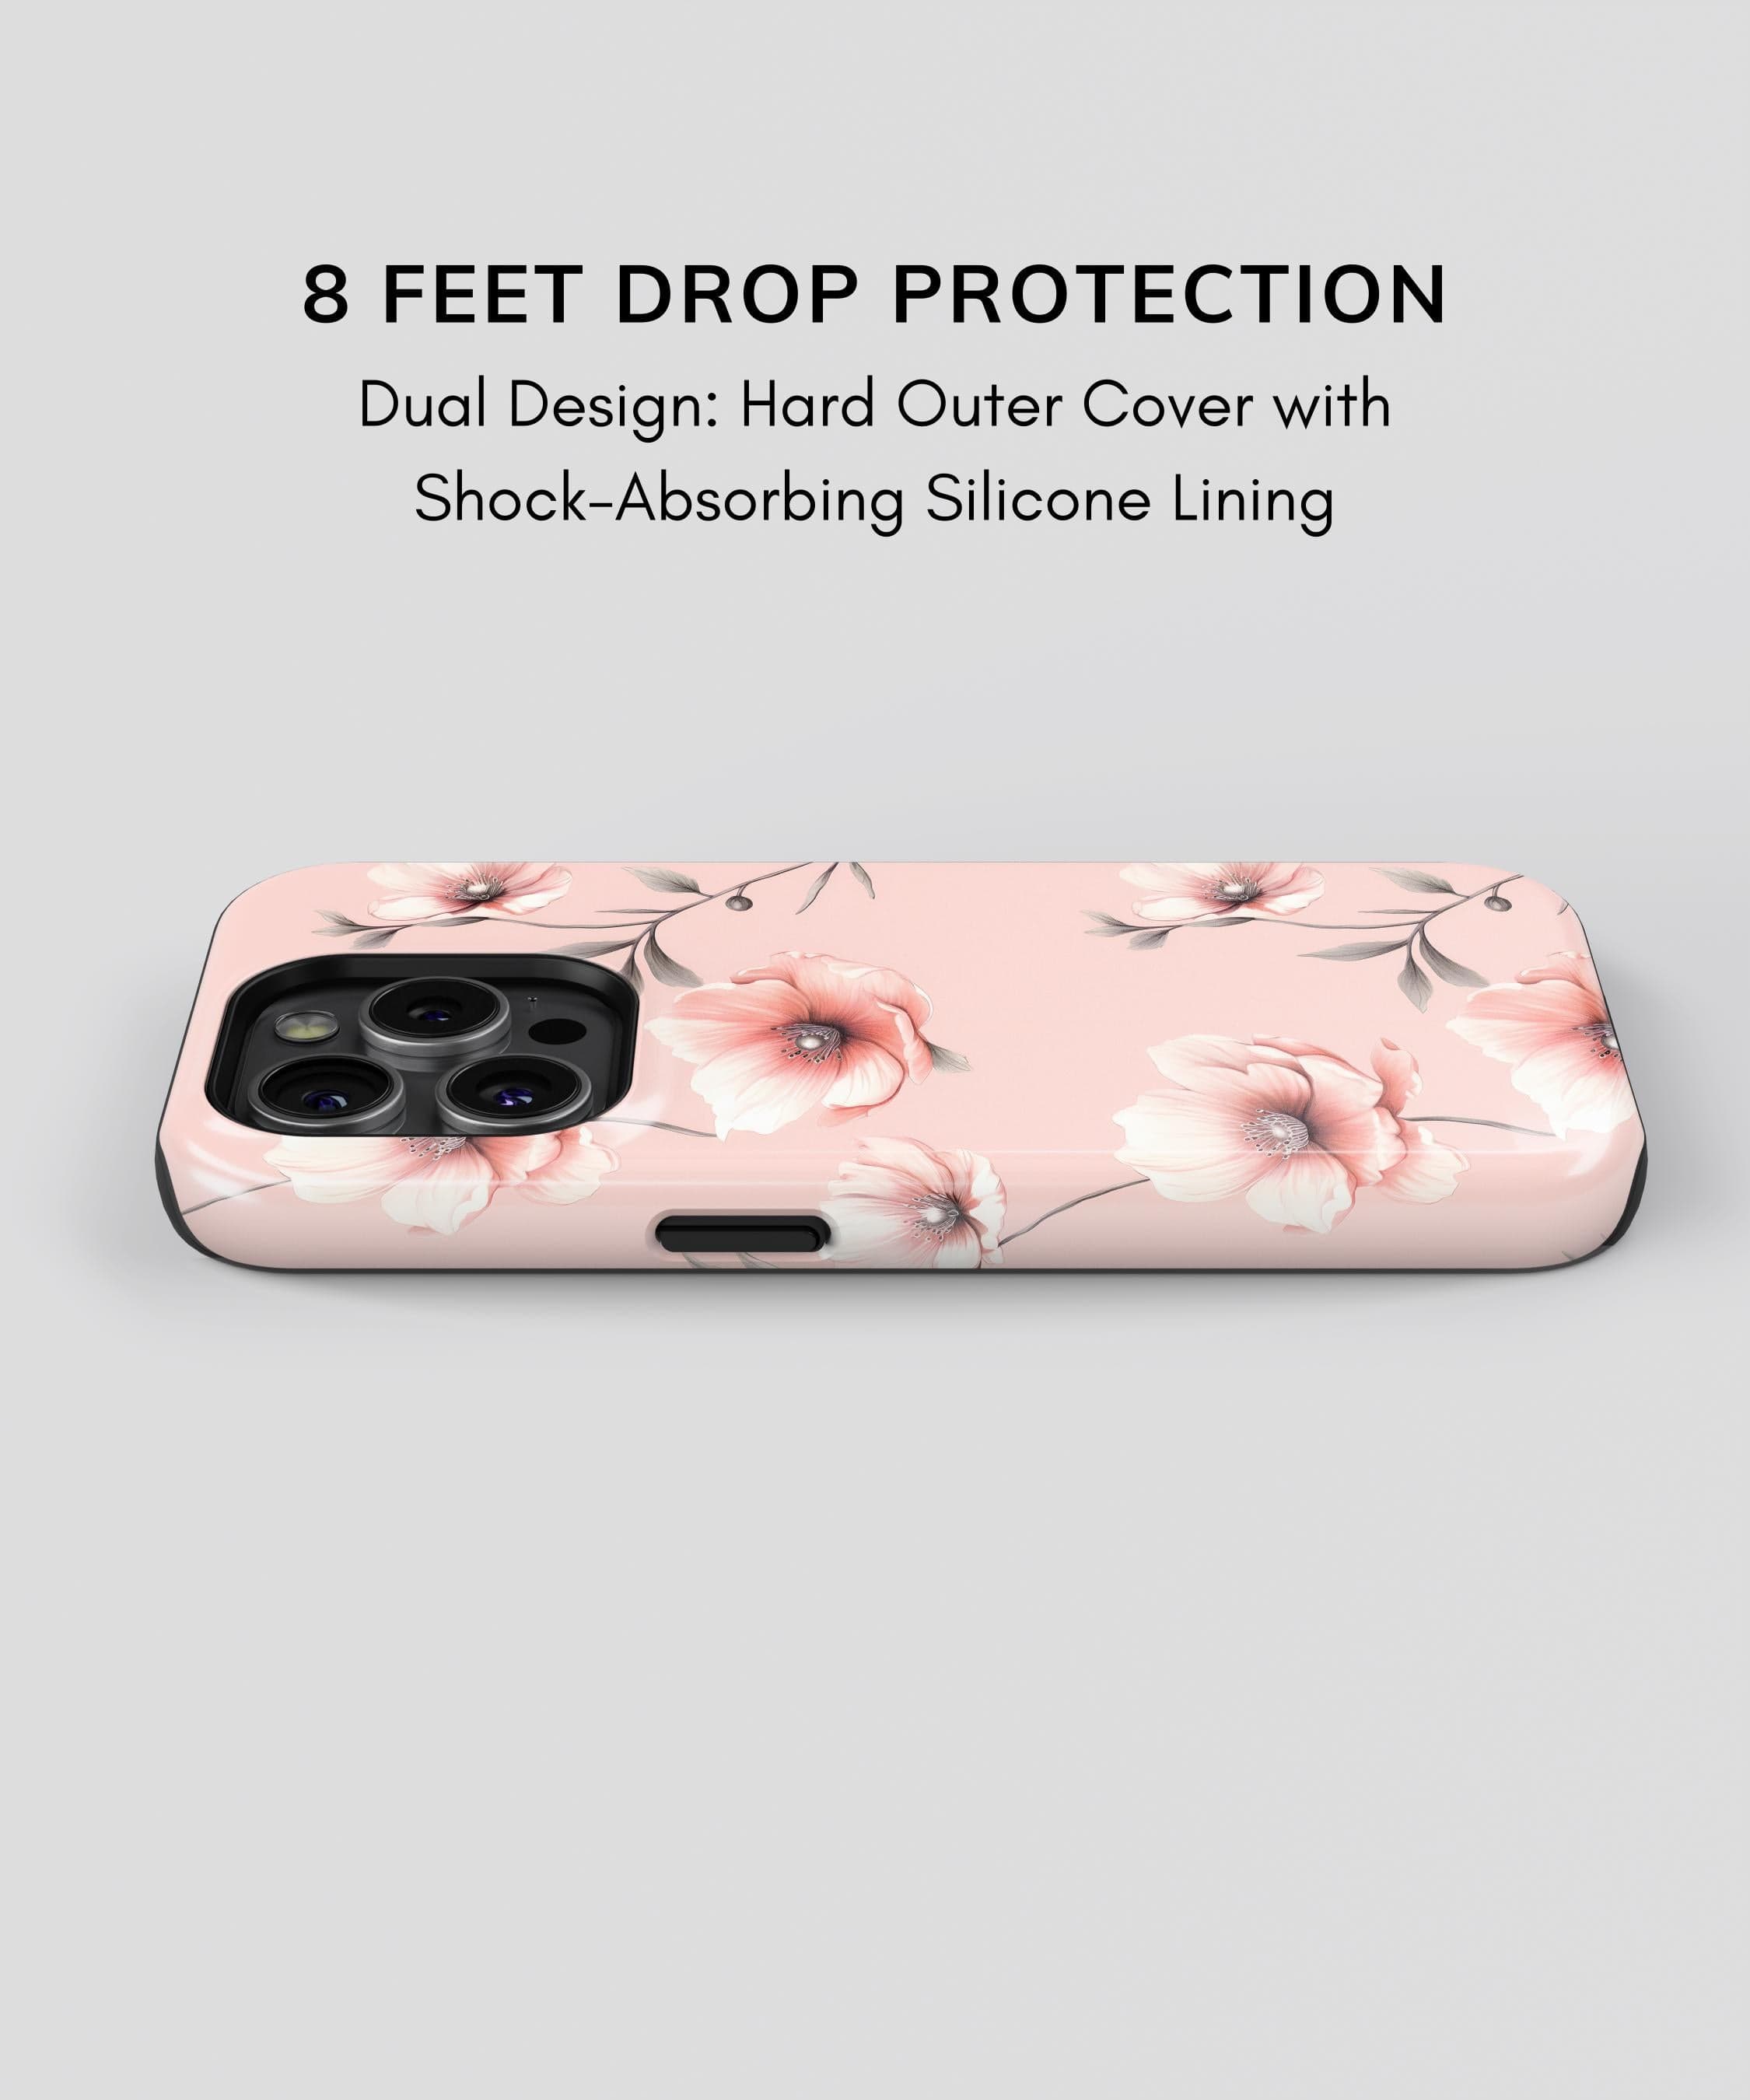 Pink Poppy iPhone Case